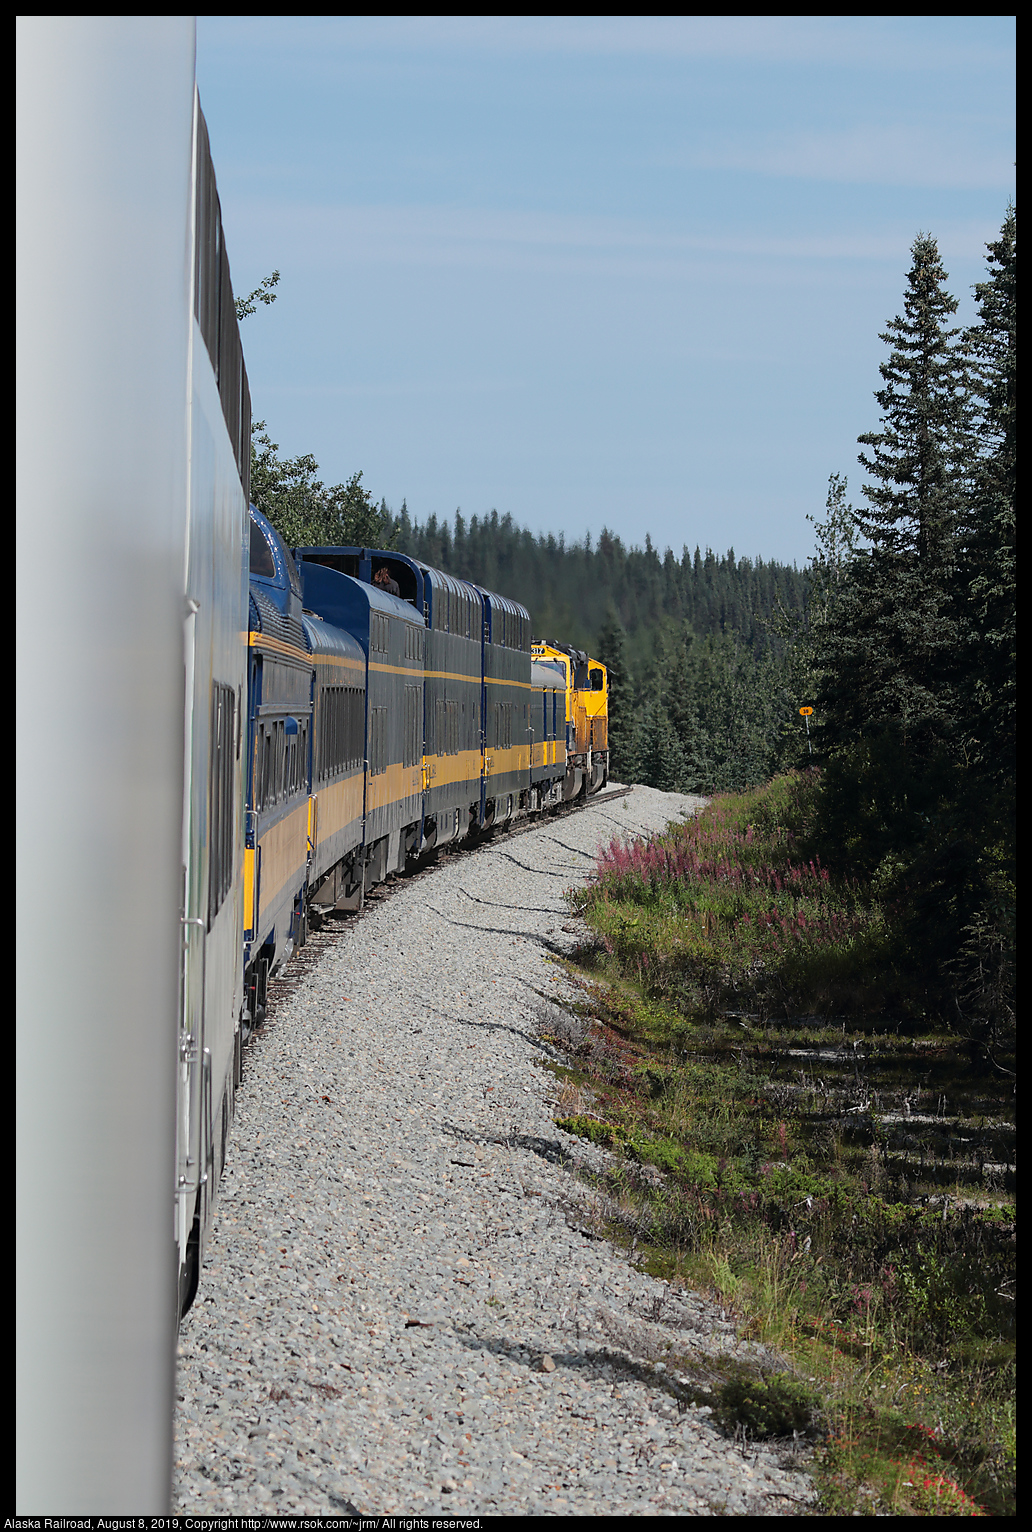 Alaska Railroad, August 8, 2019